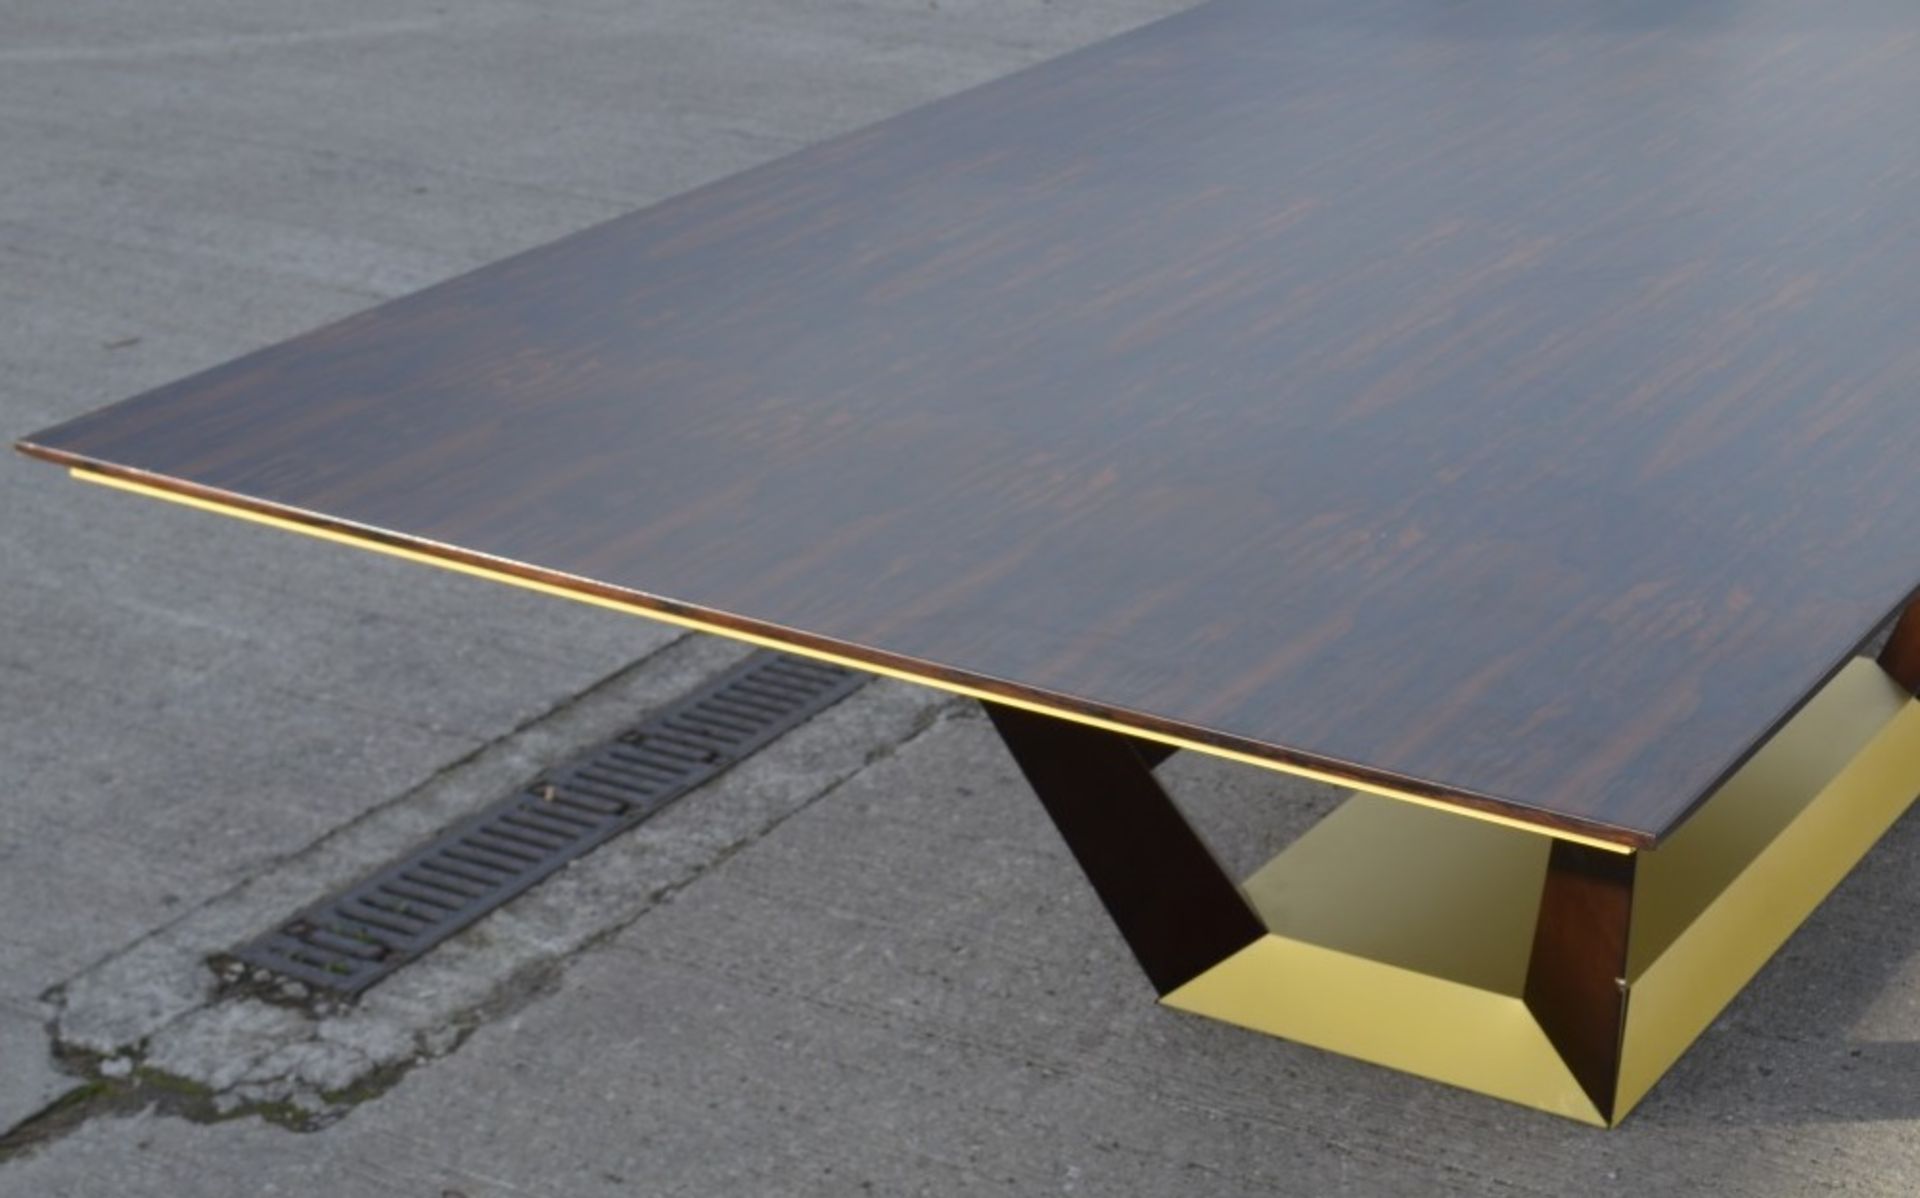 1 x PORADA Ellington Dining Table - 2.6 Metres In Length - Ref: 5568978/5568980 BK3/2909 - Image 5 of 9